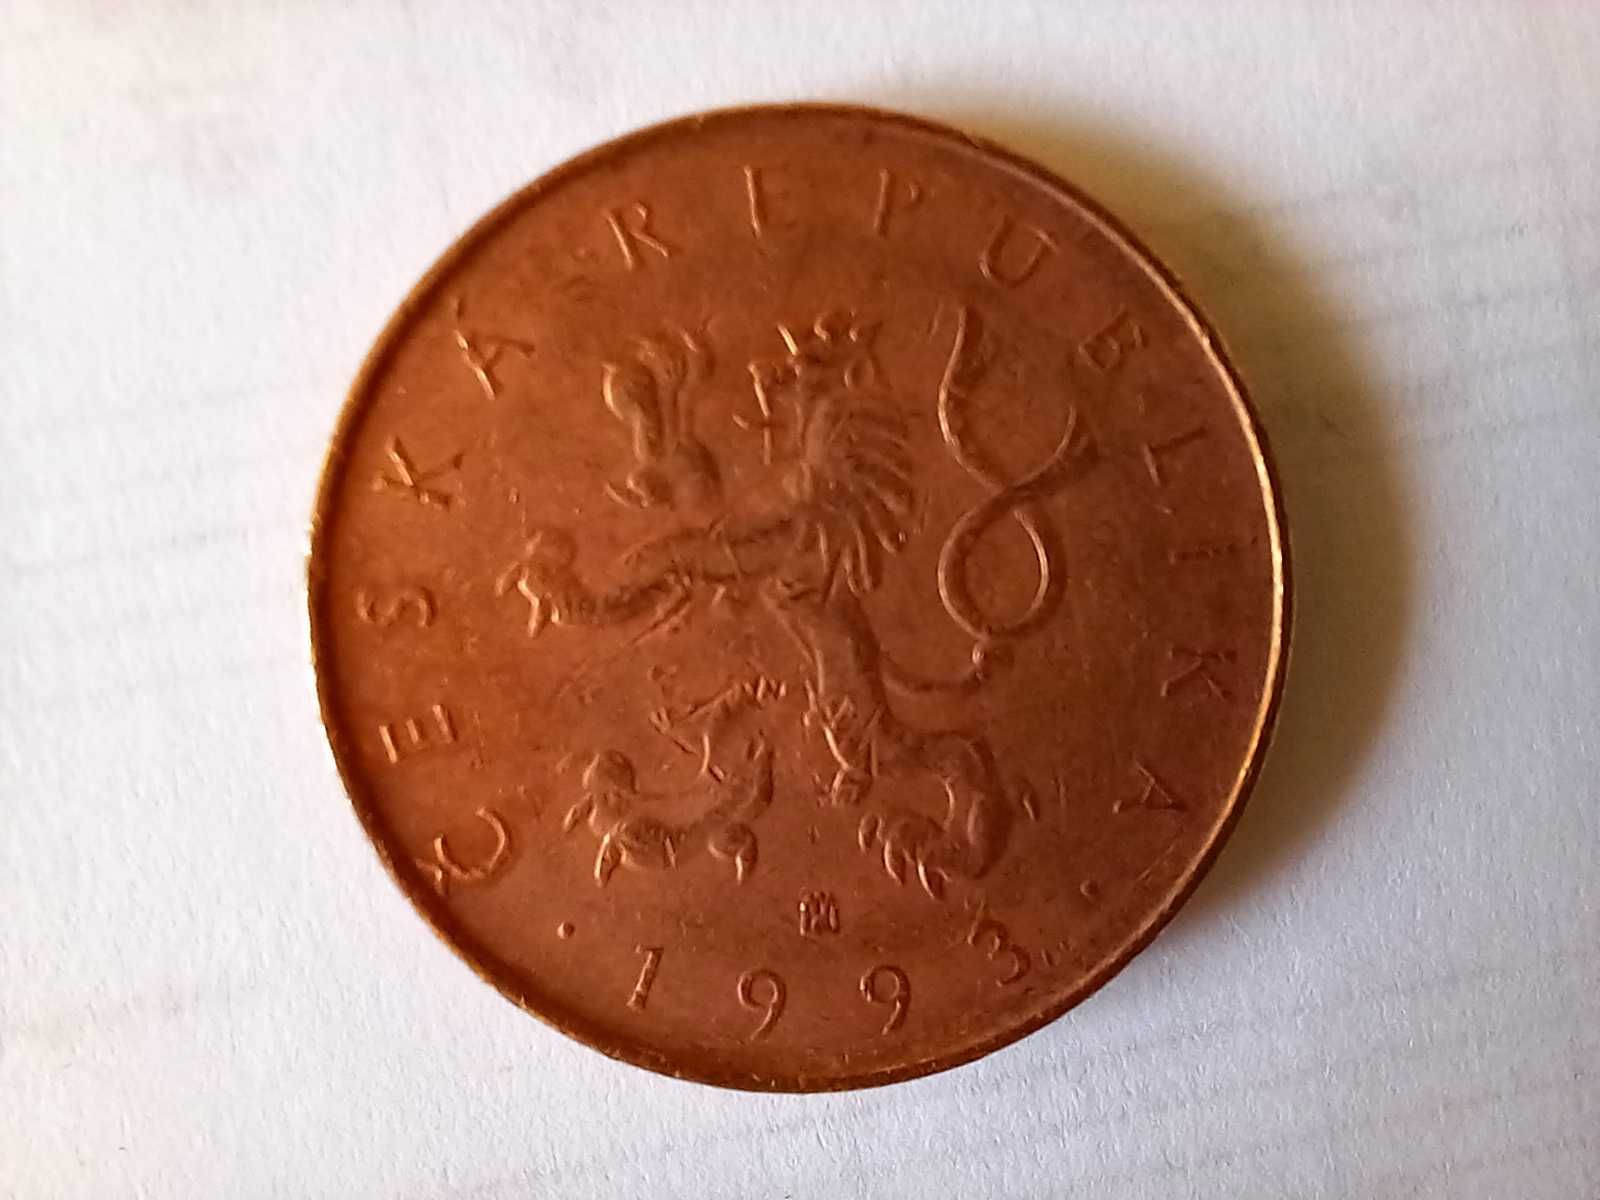 Moneta Czechy - 10 koron 1993 /4/